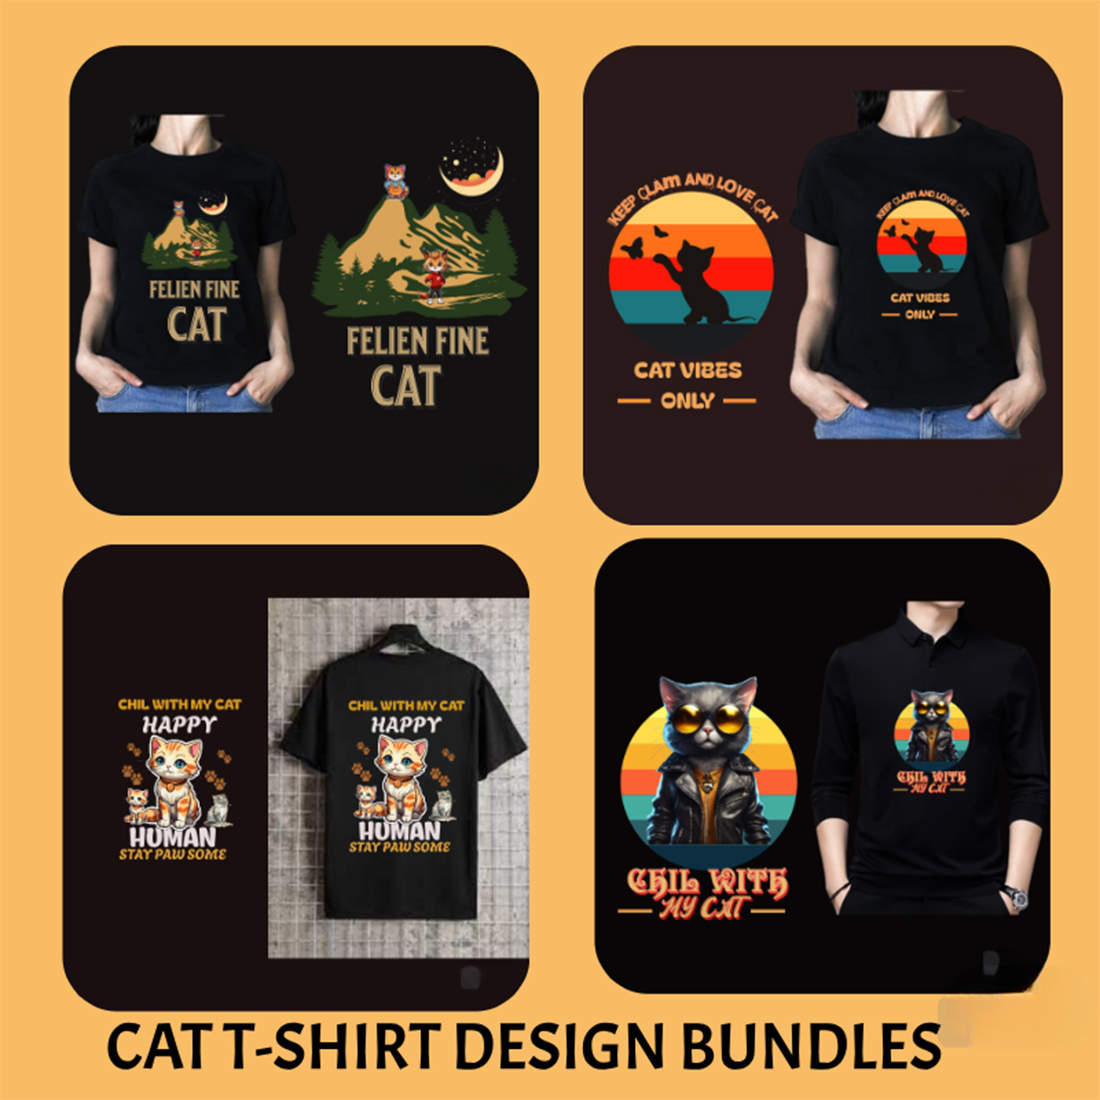 Cat T-Shirt Design cover image.